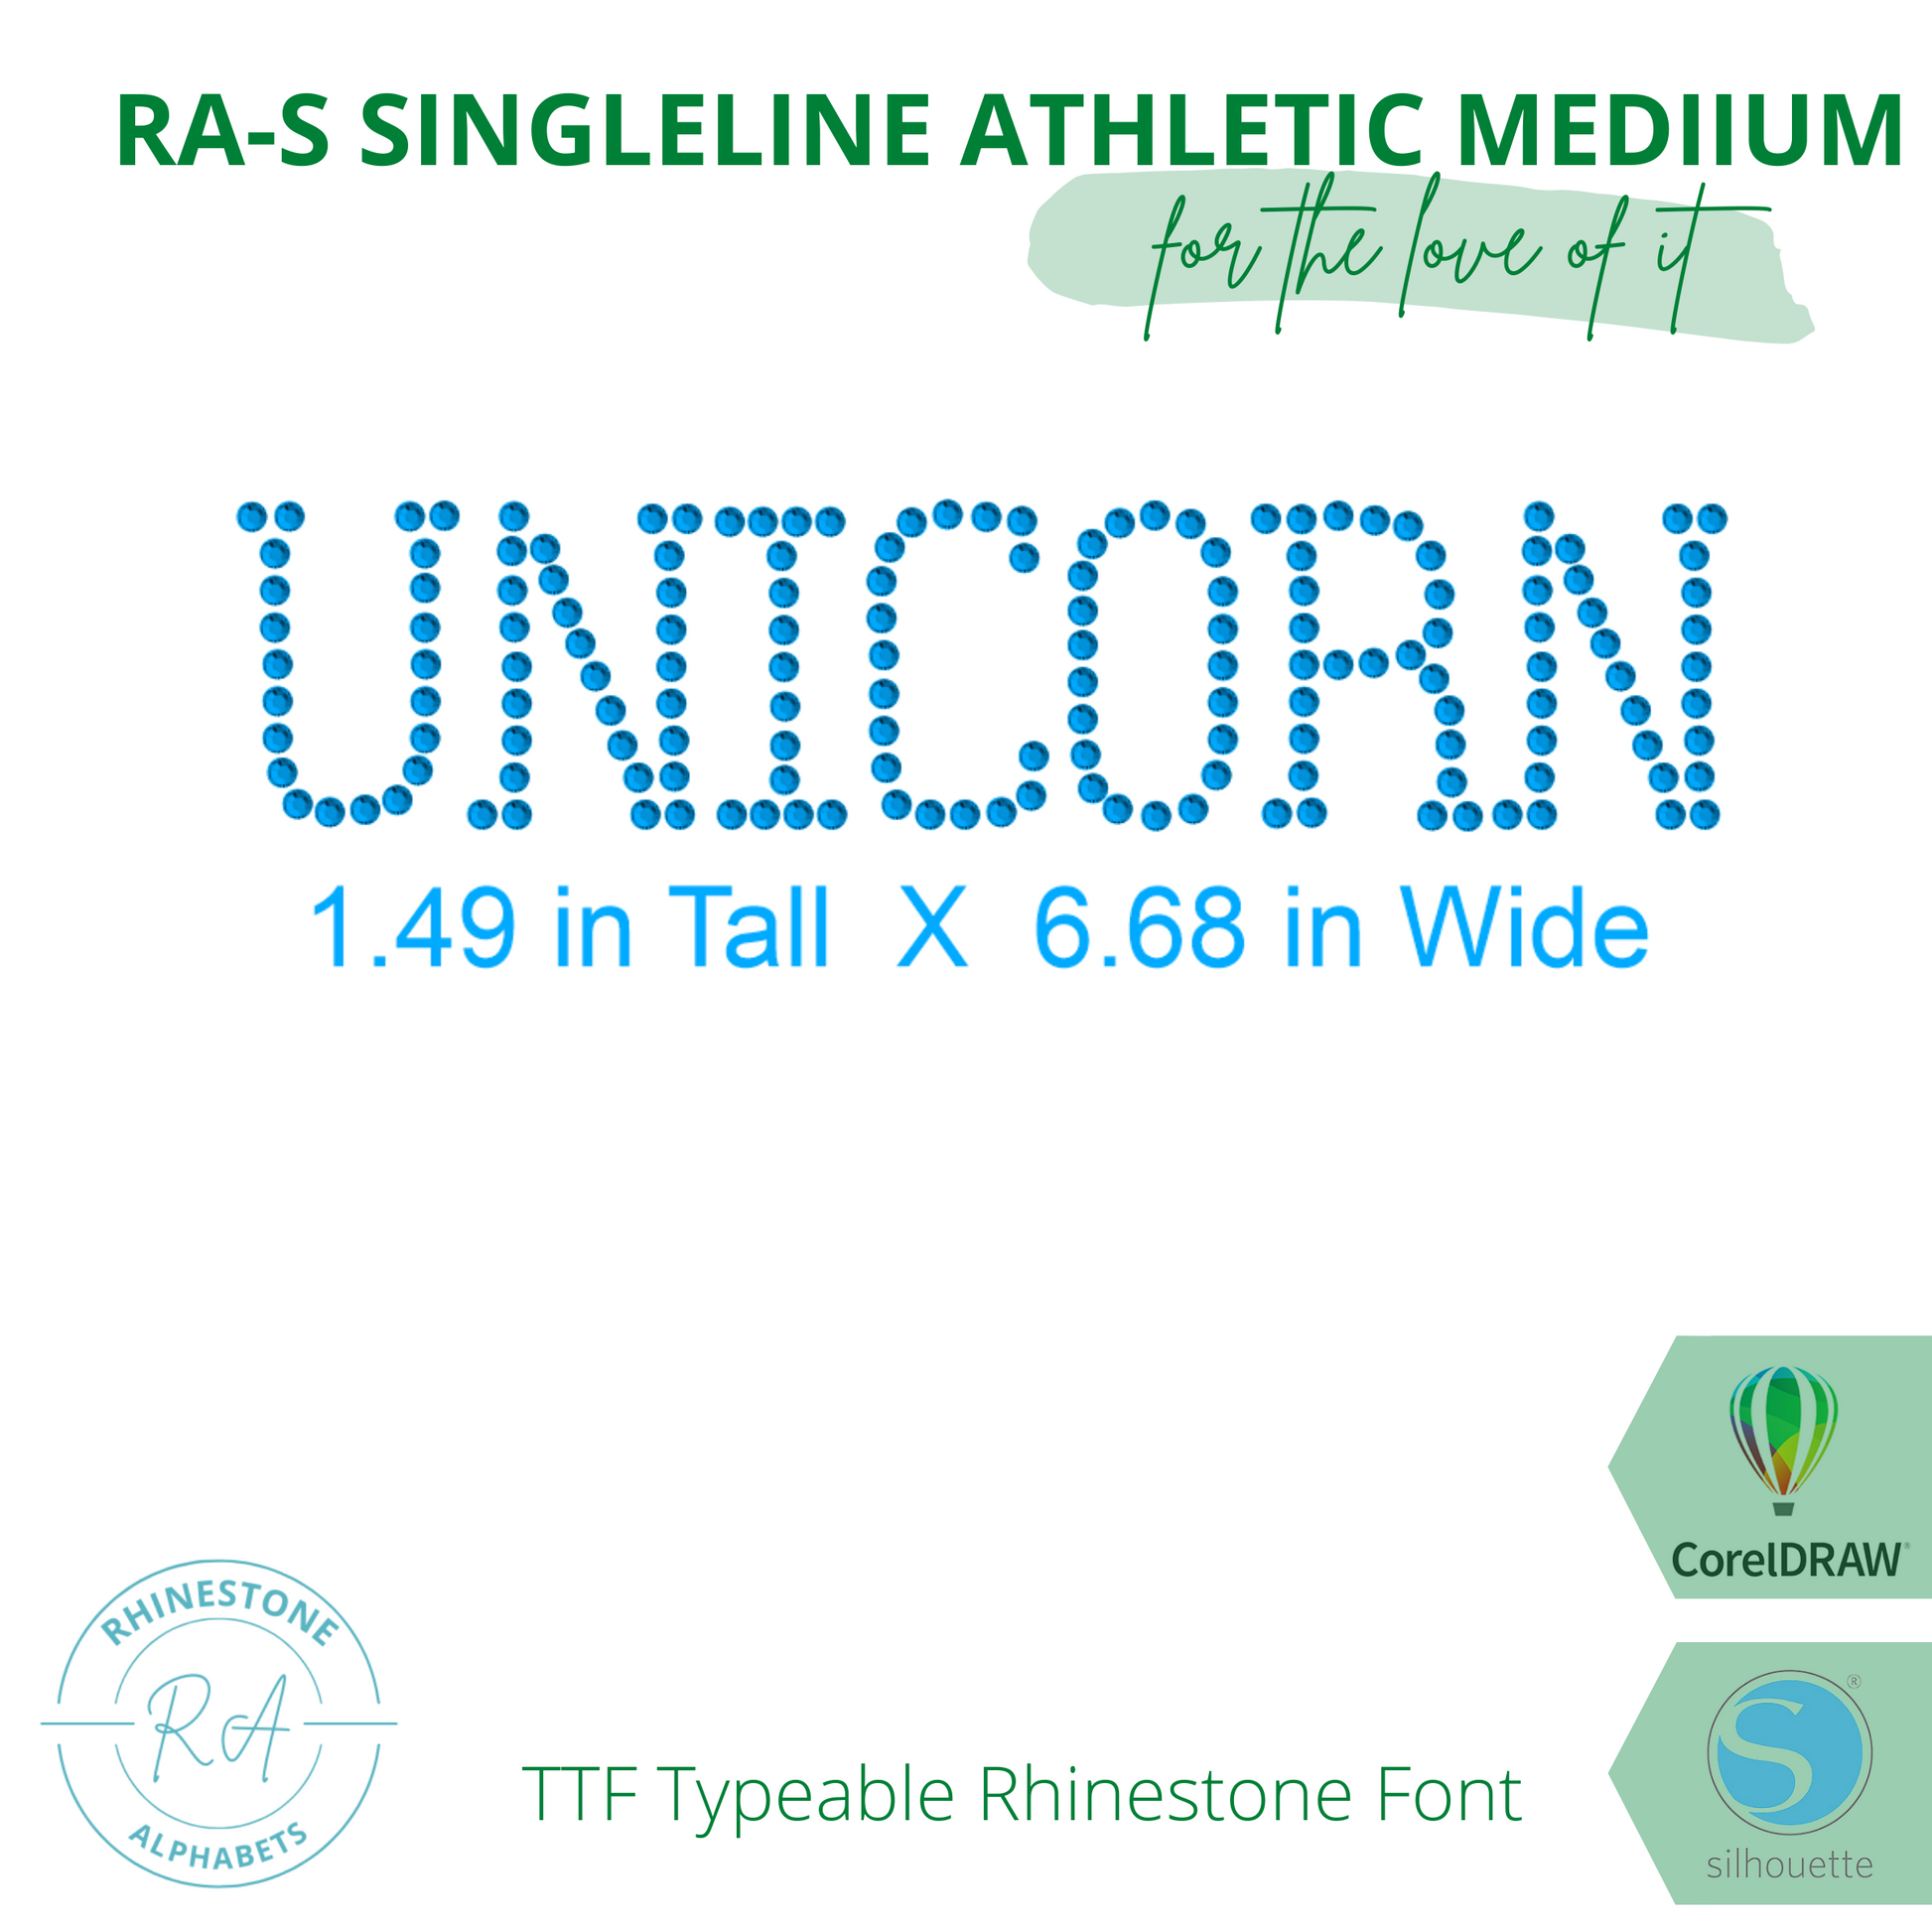 RA-S Medium Athletic SingleLine - RhinestoneAlphabets